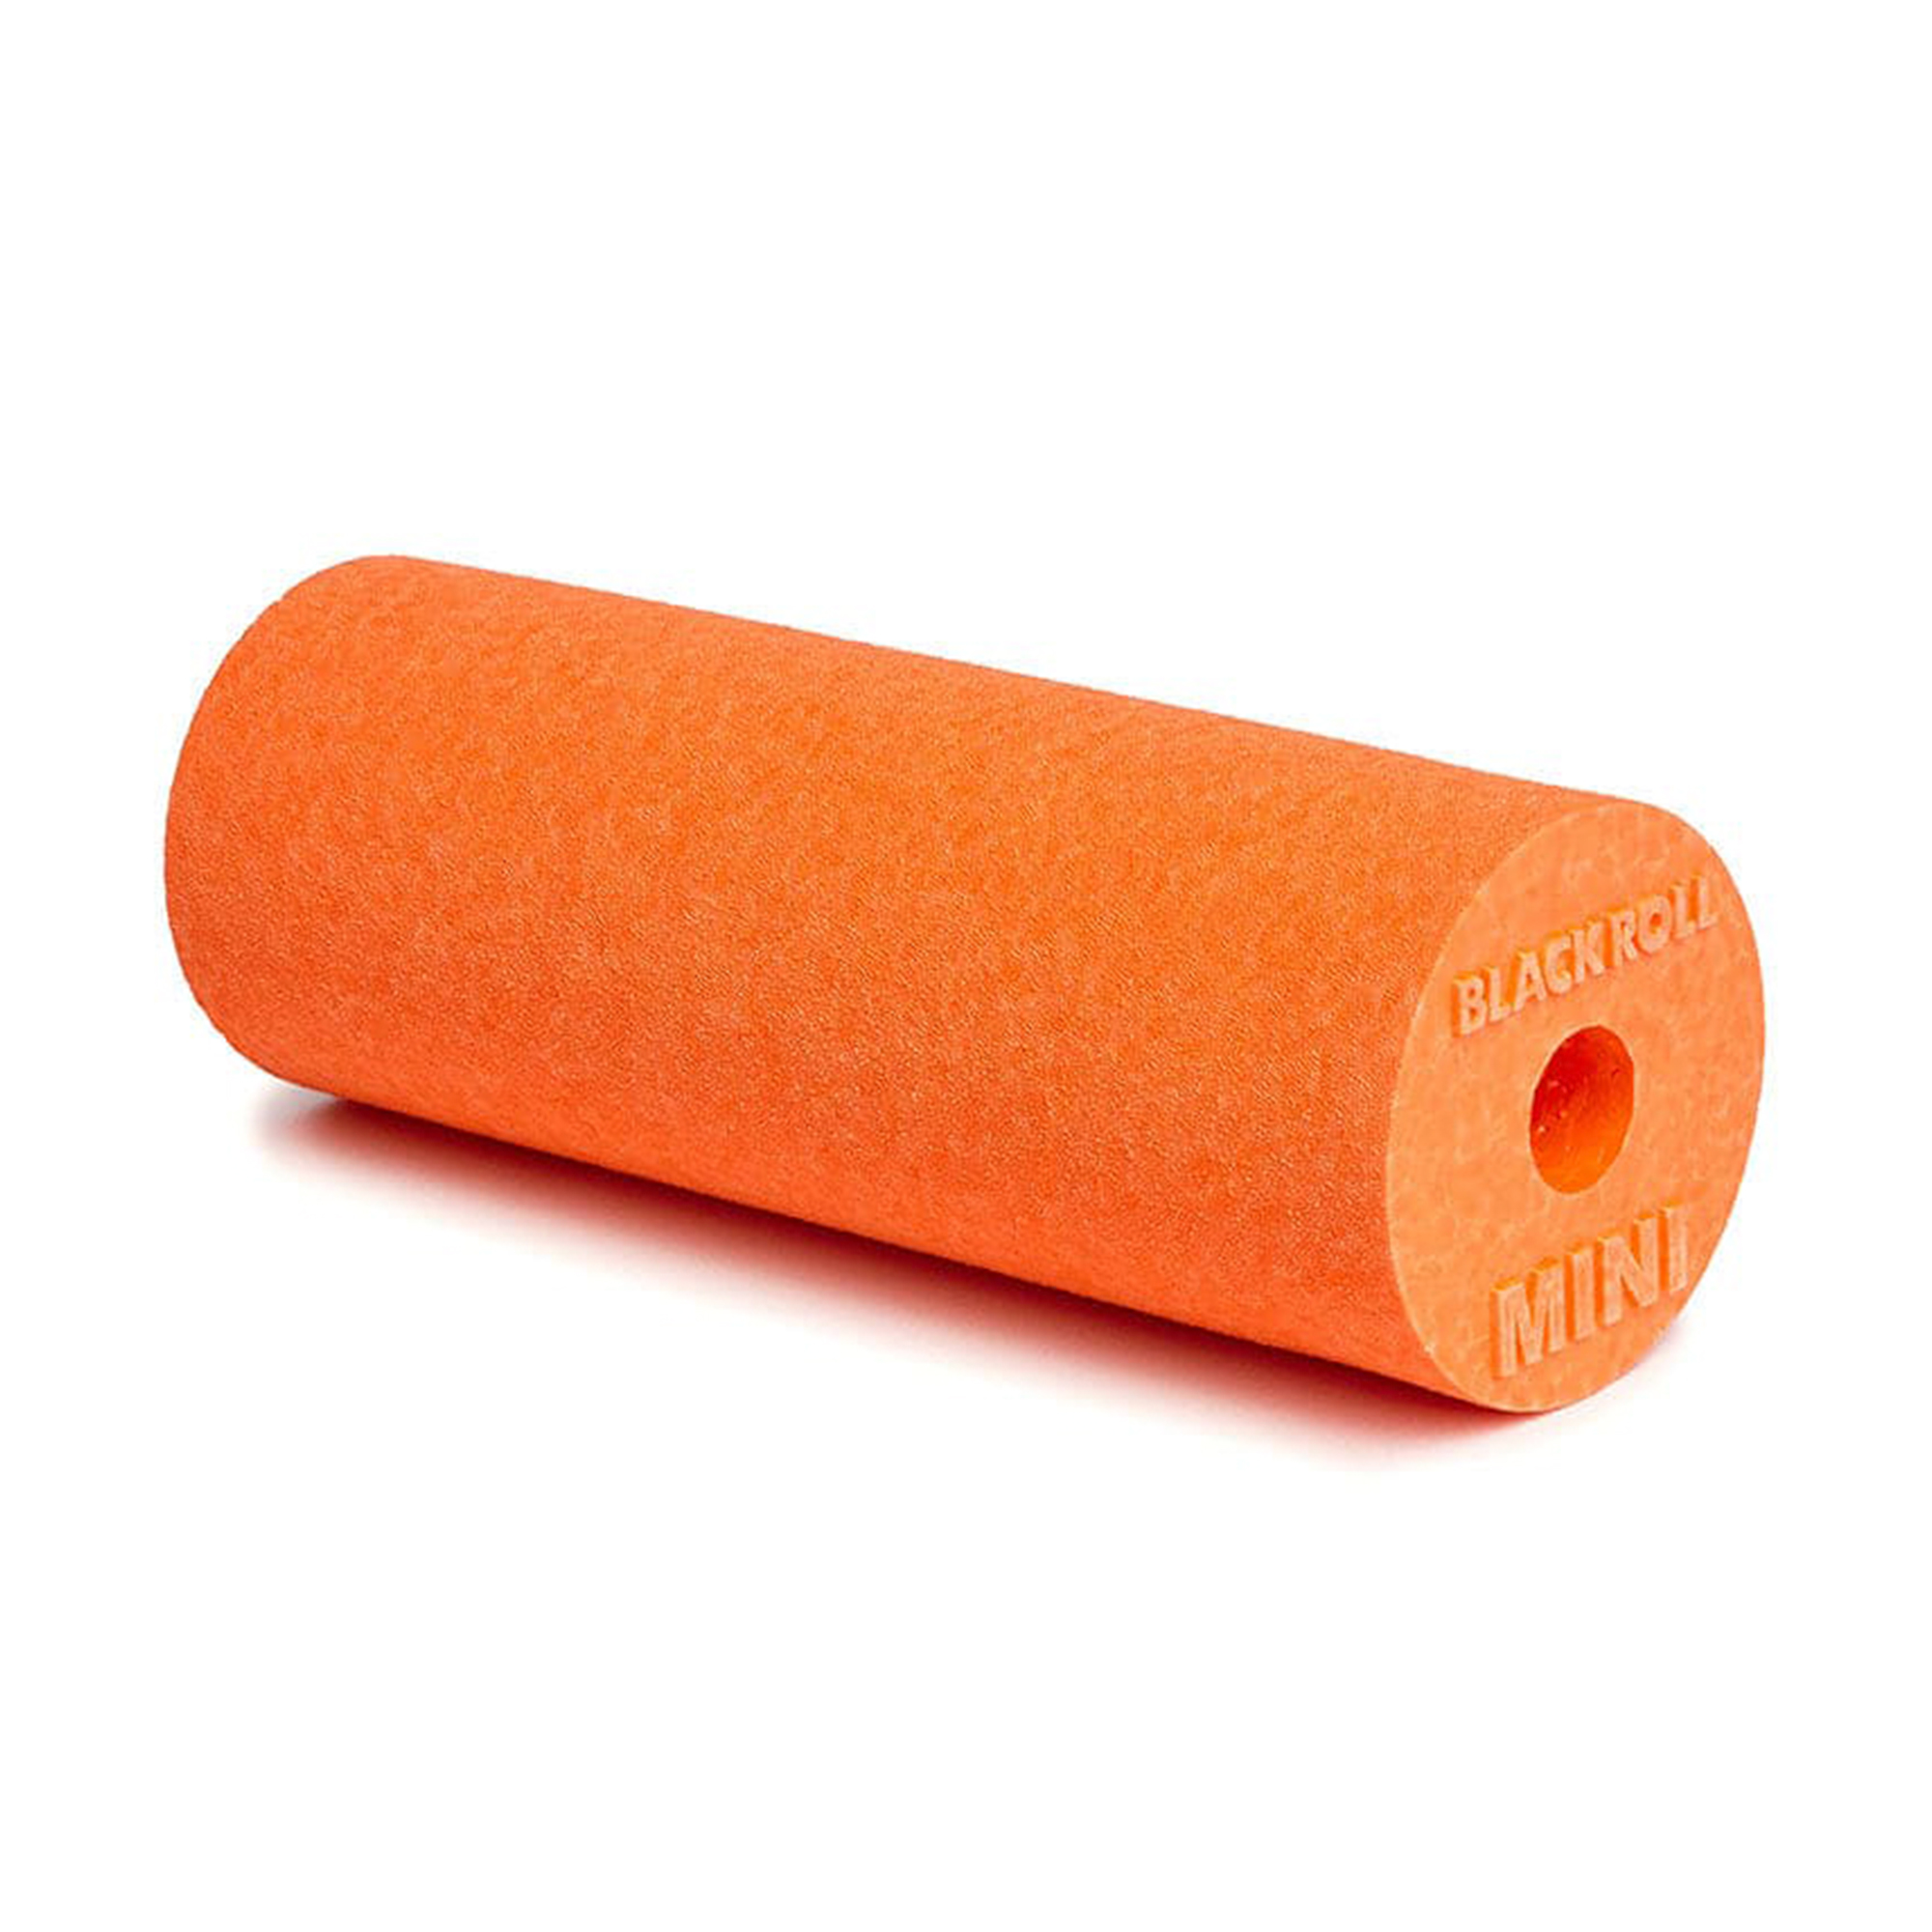 Blackroll Mini Foam Roller Orange - 15 x 6 cm thumbnail